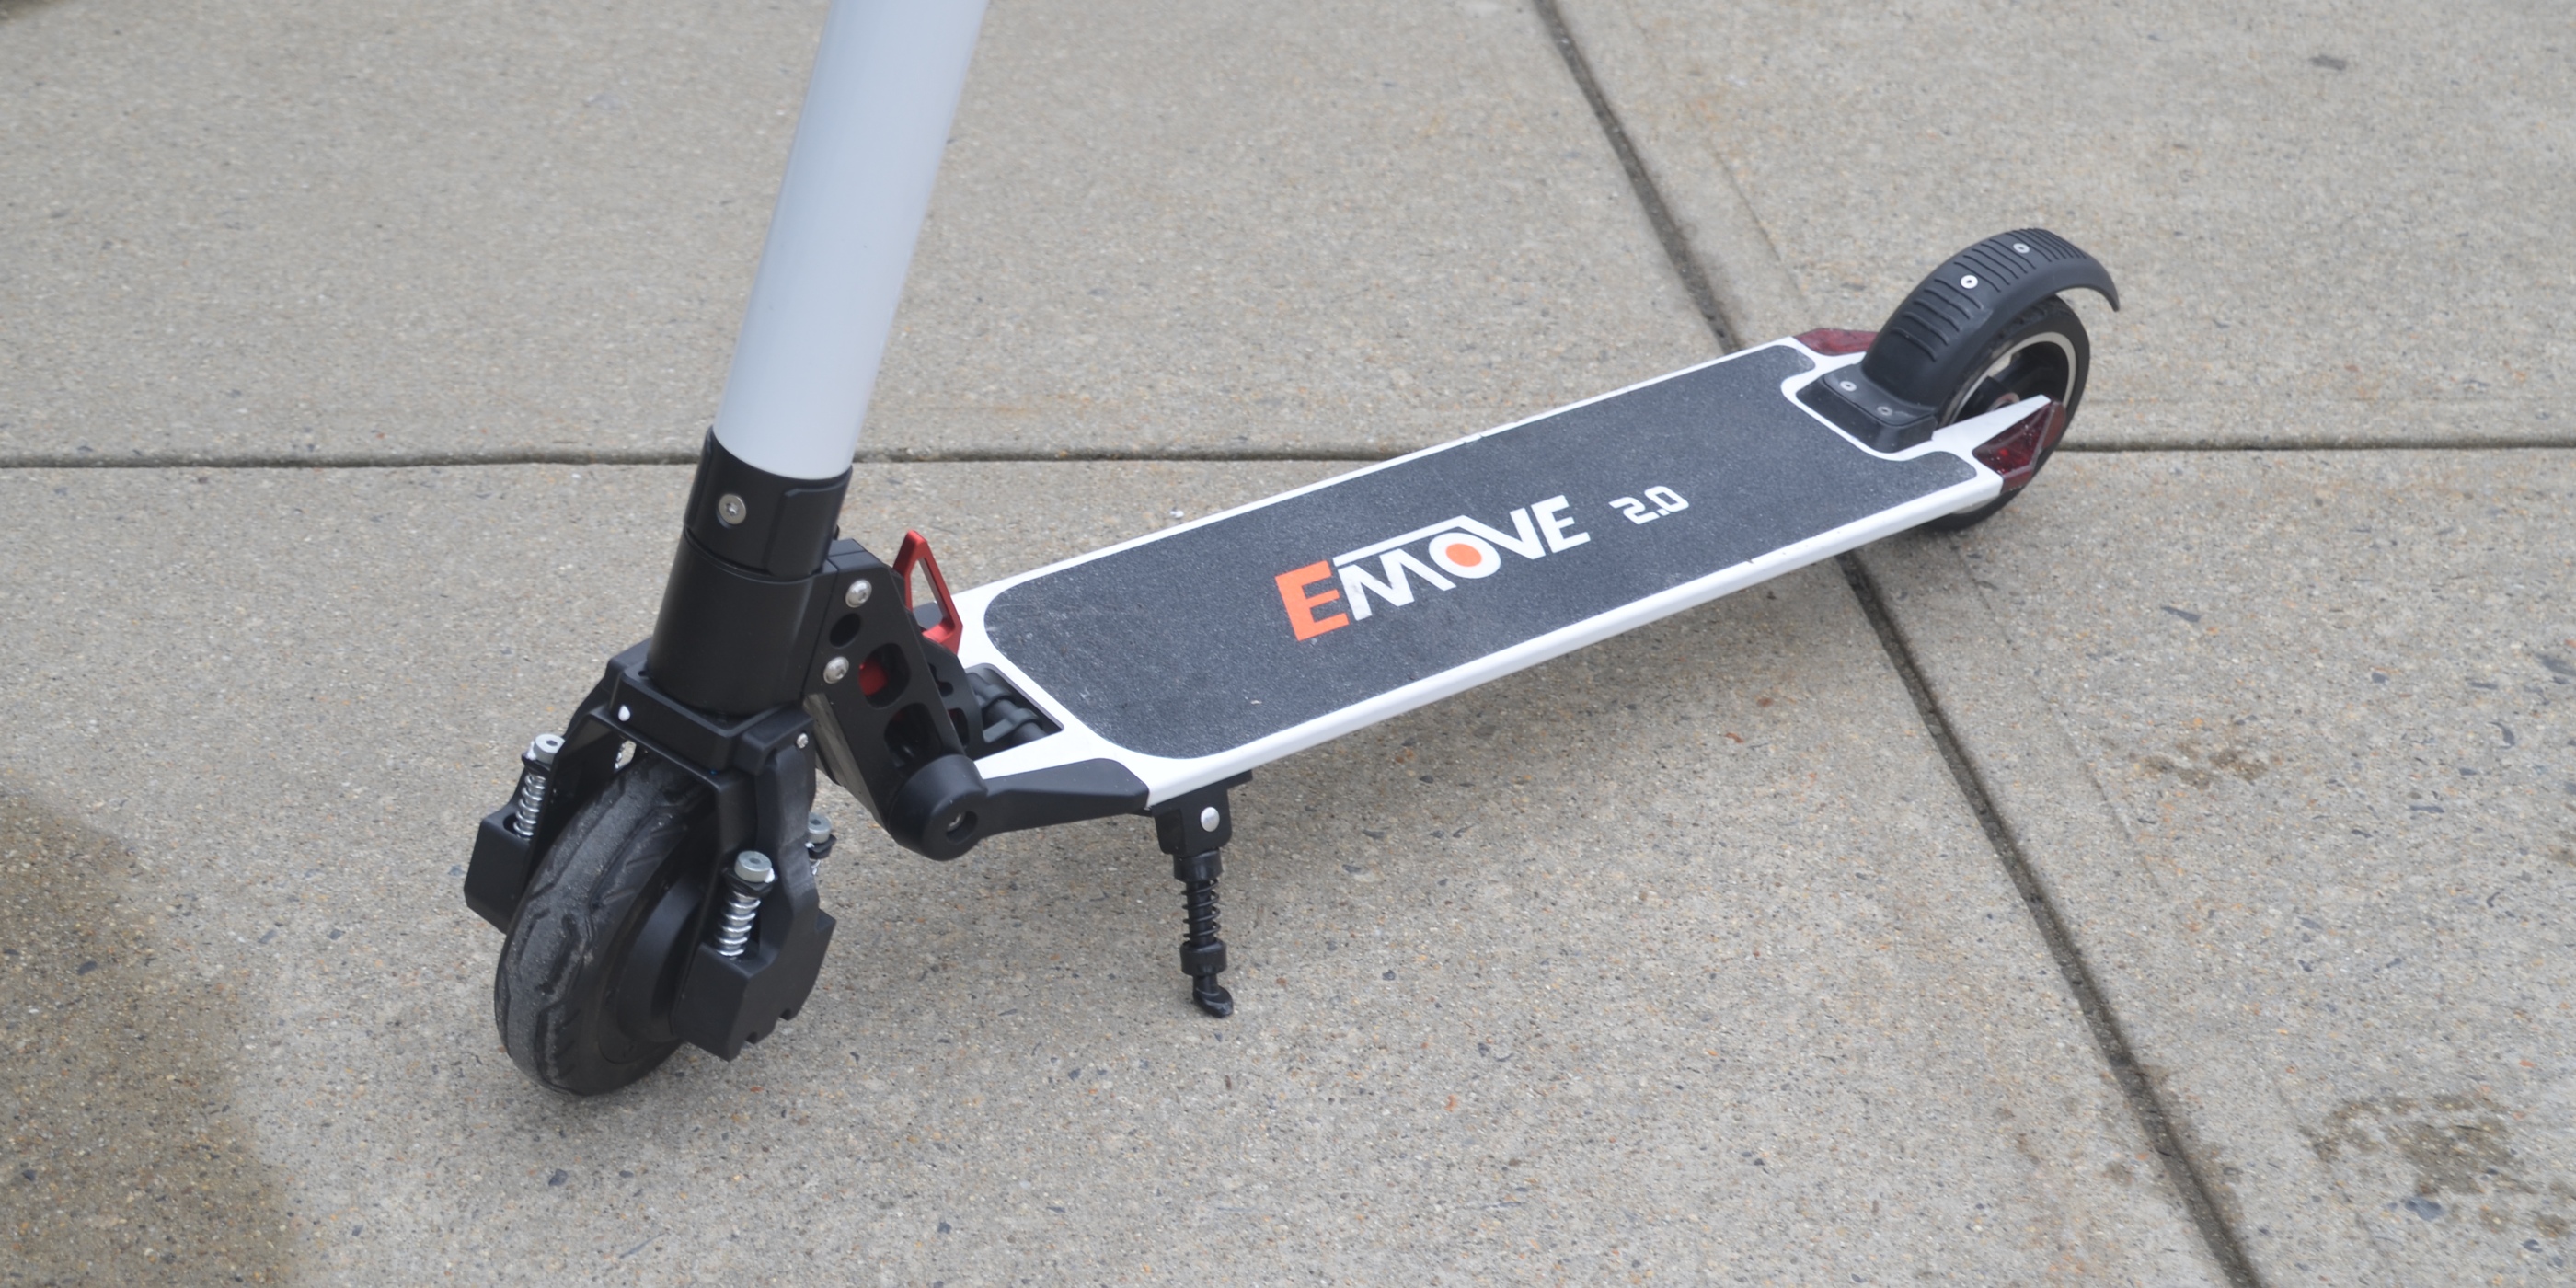 Review: EMOVE 2.0 electric scooter is I've ridden at 7 kg | Electrek